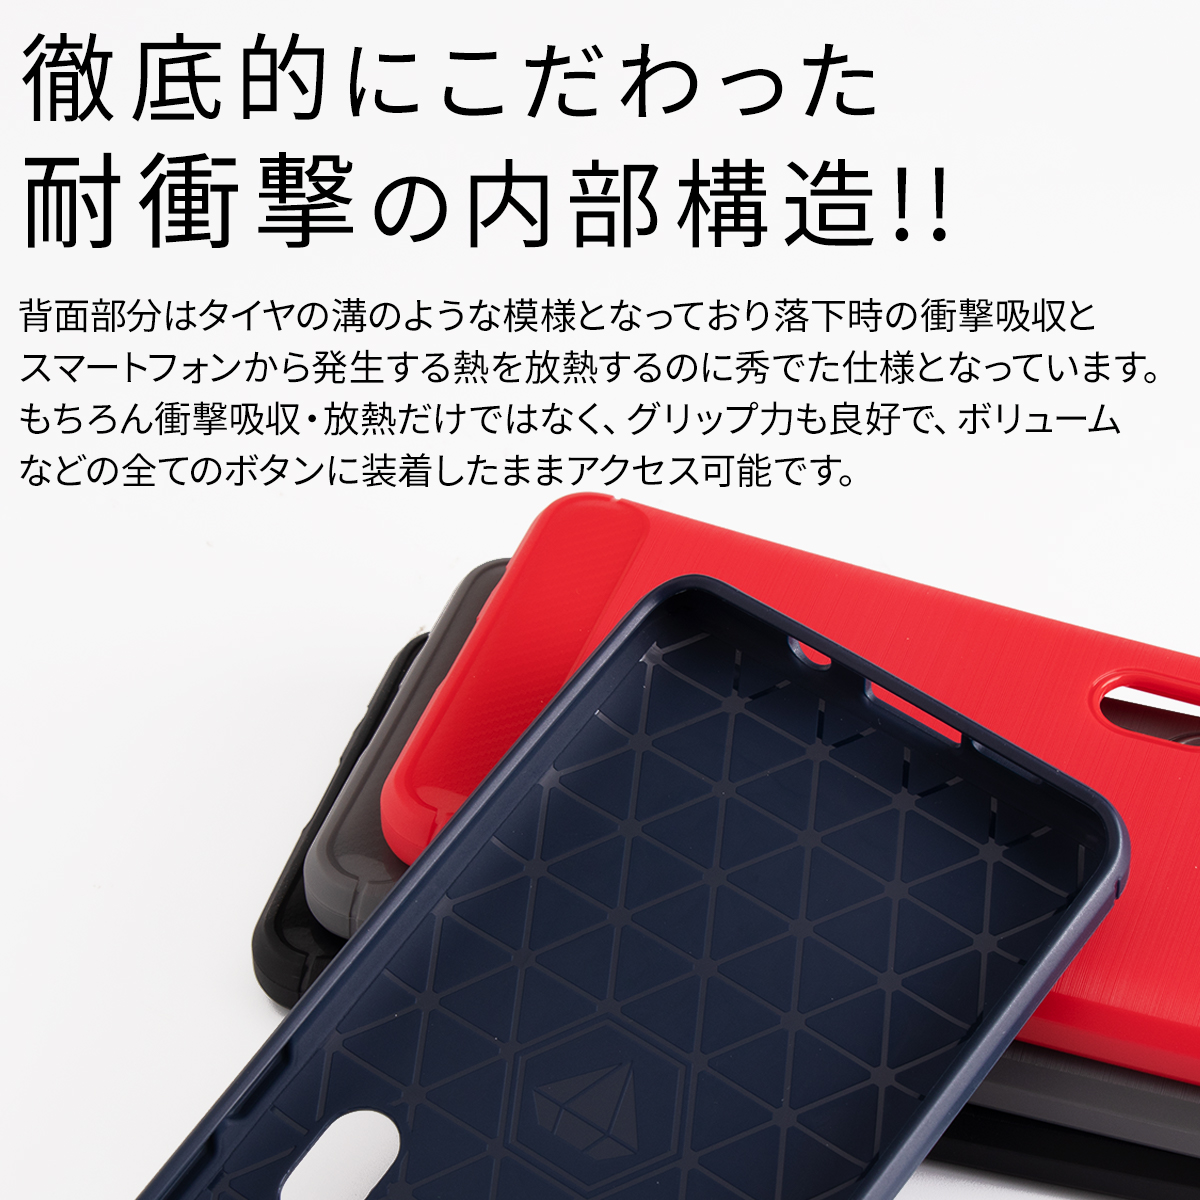 Redmi Note 9S カーボン調TPUケース